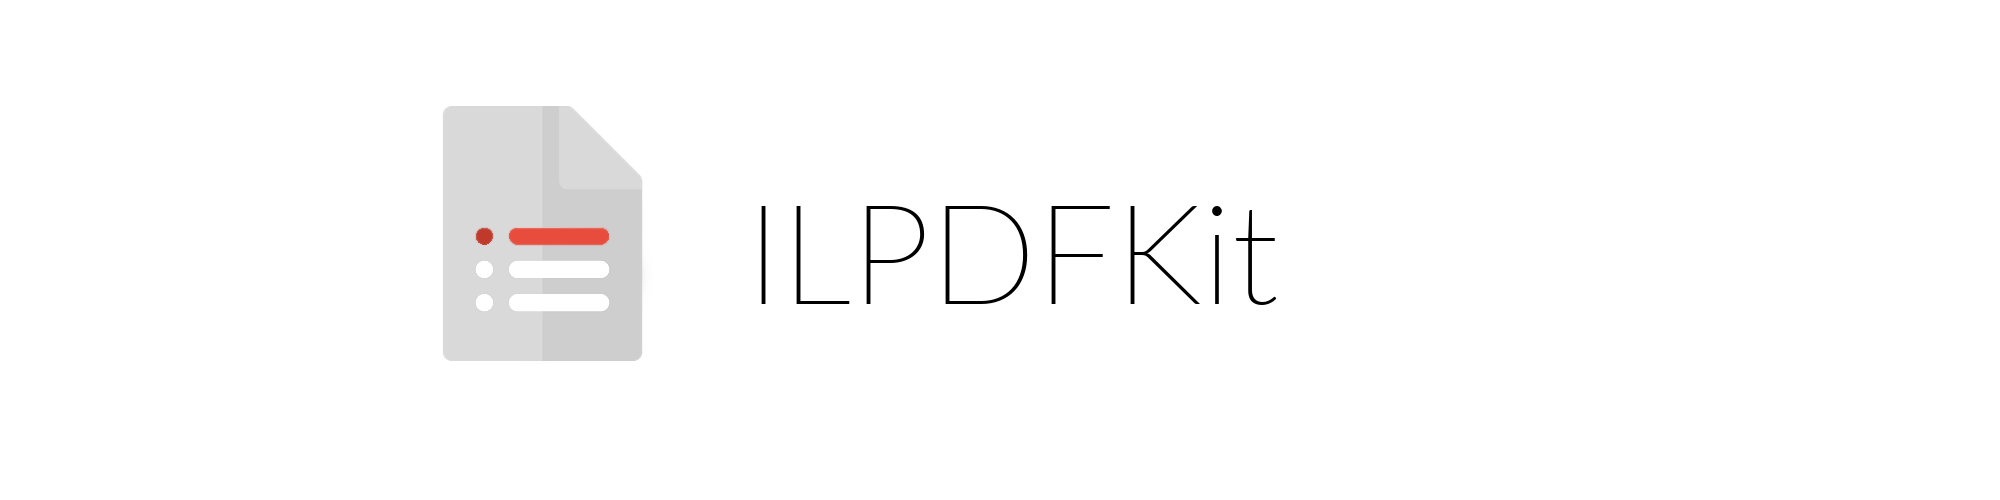 ILPDFKit Logo